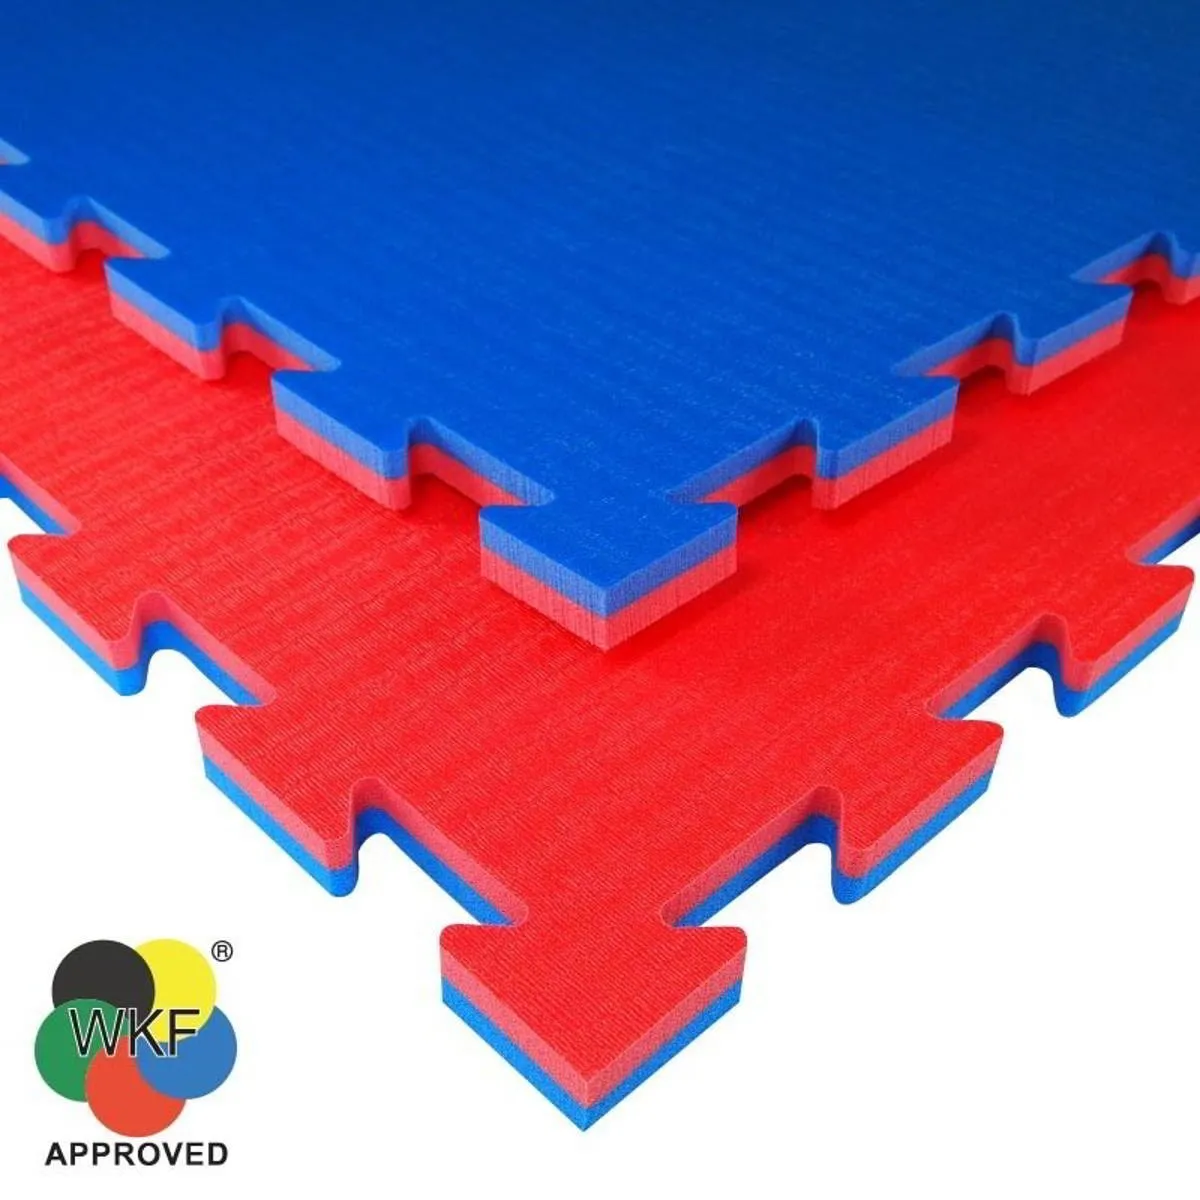 Colchoneta puzzle kárate homologada WKF rojo/azul Tatamix 100x100 x 2cm